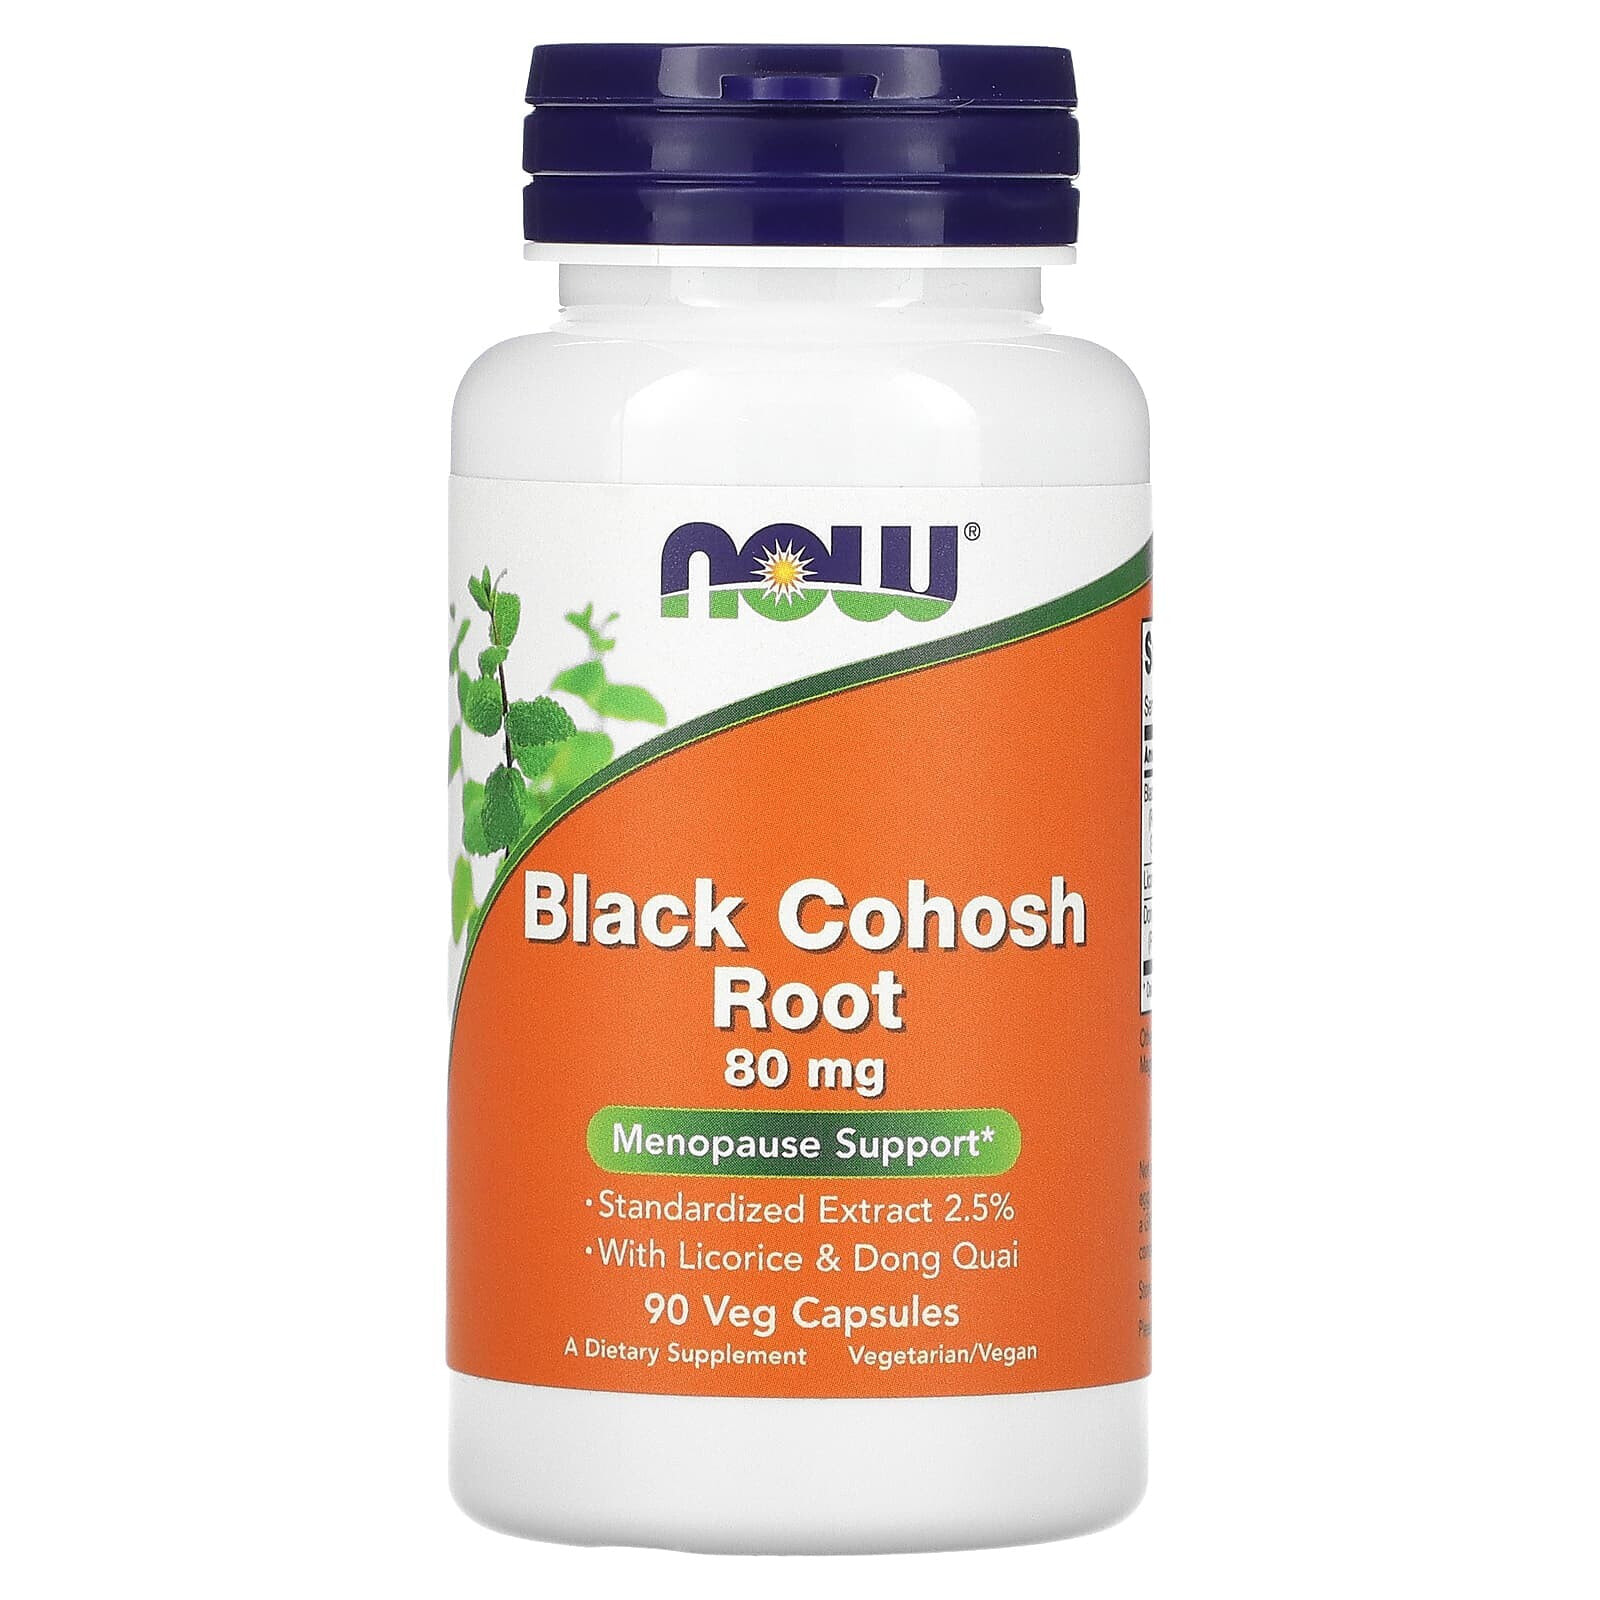 Black Cohosh Root, 80 mg, 90 Veg Capsules